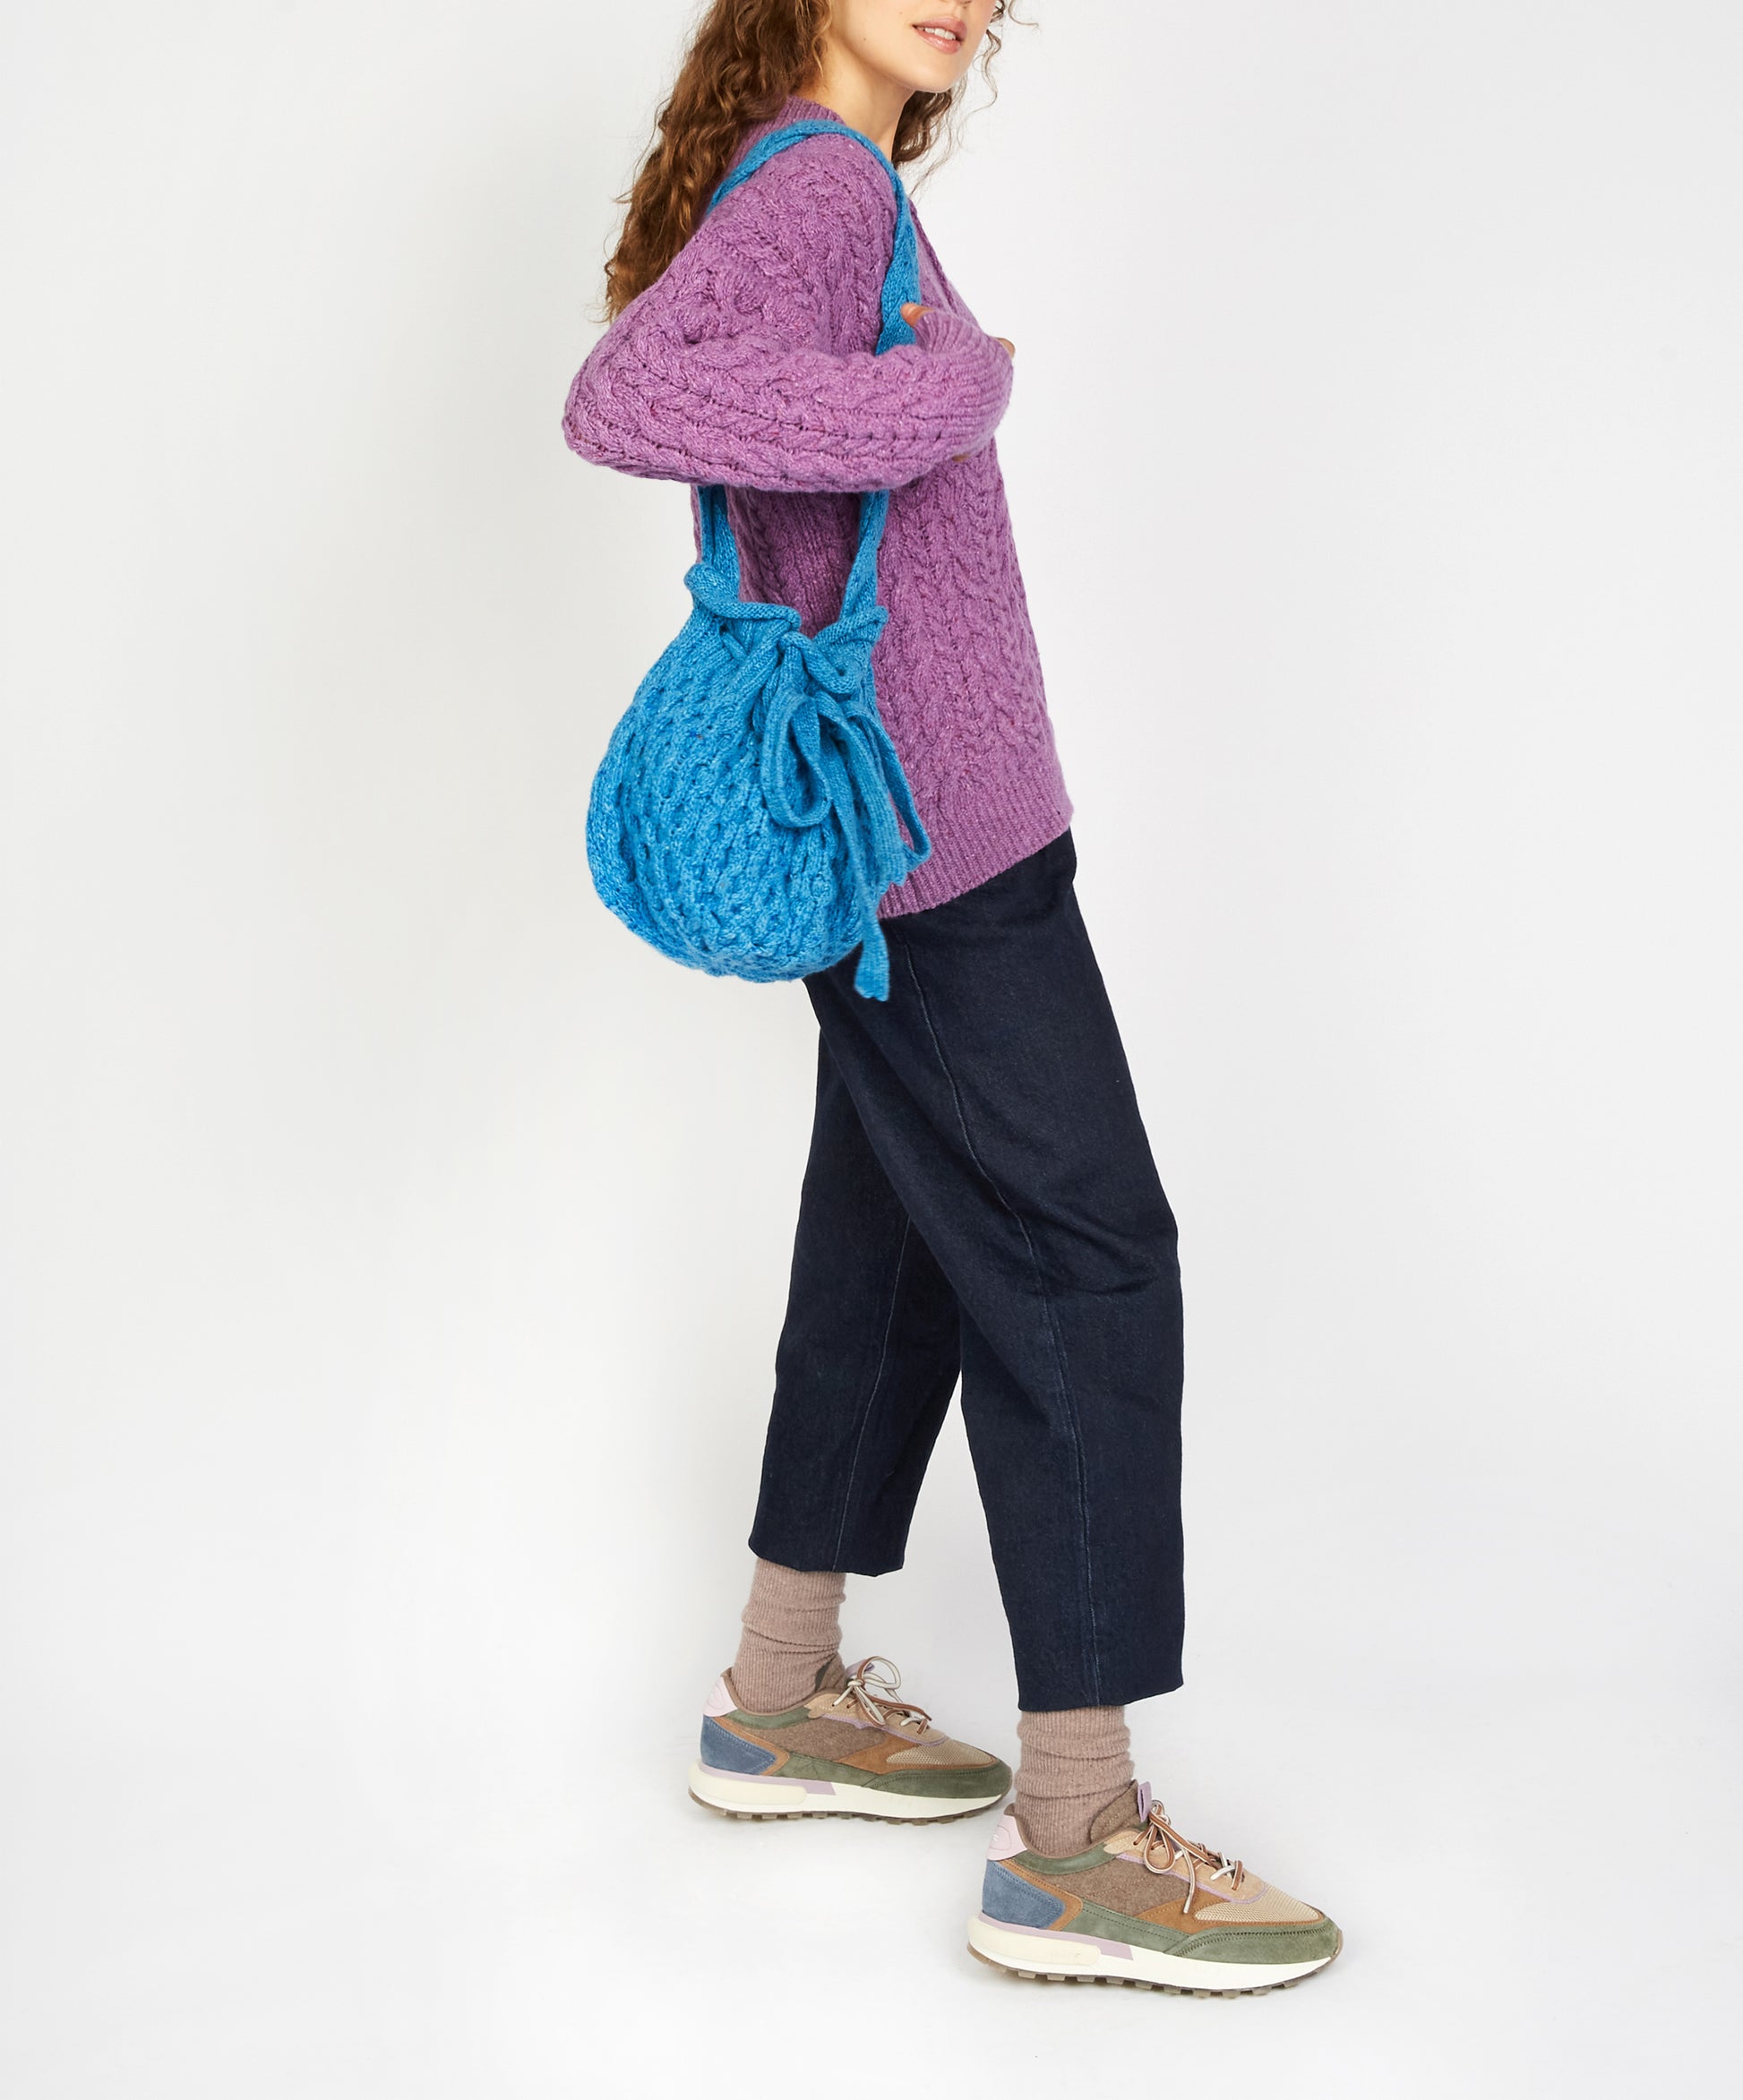 IrelandsEye Knitwear Melinda Bag Forget-Me-Not Blue